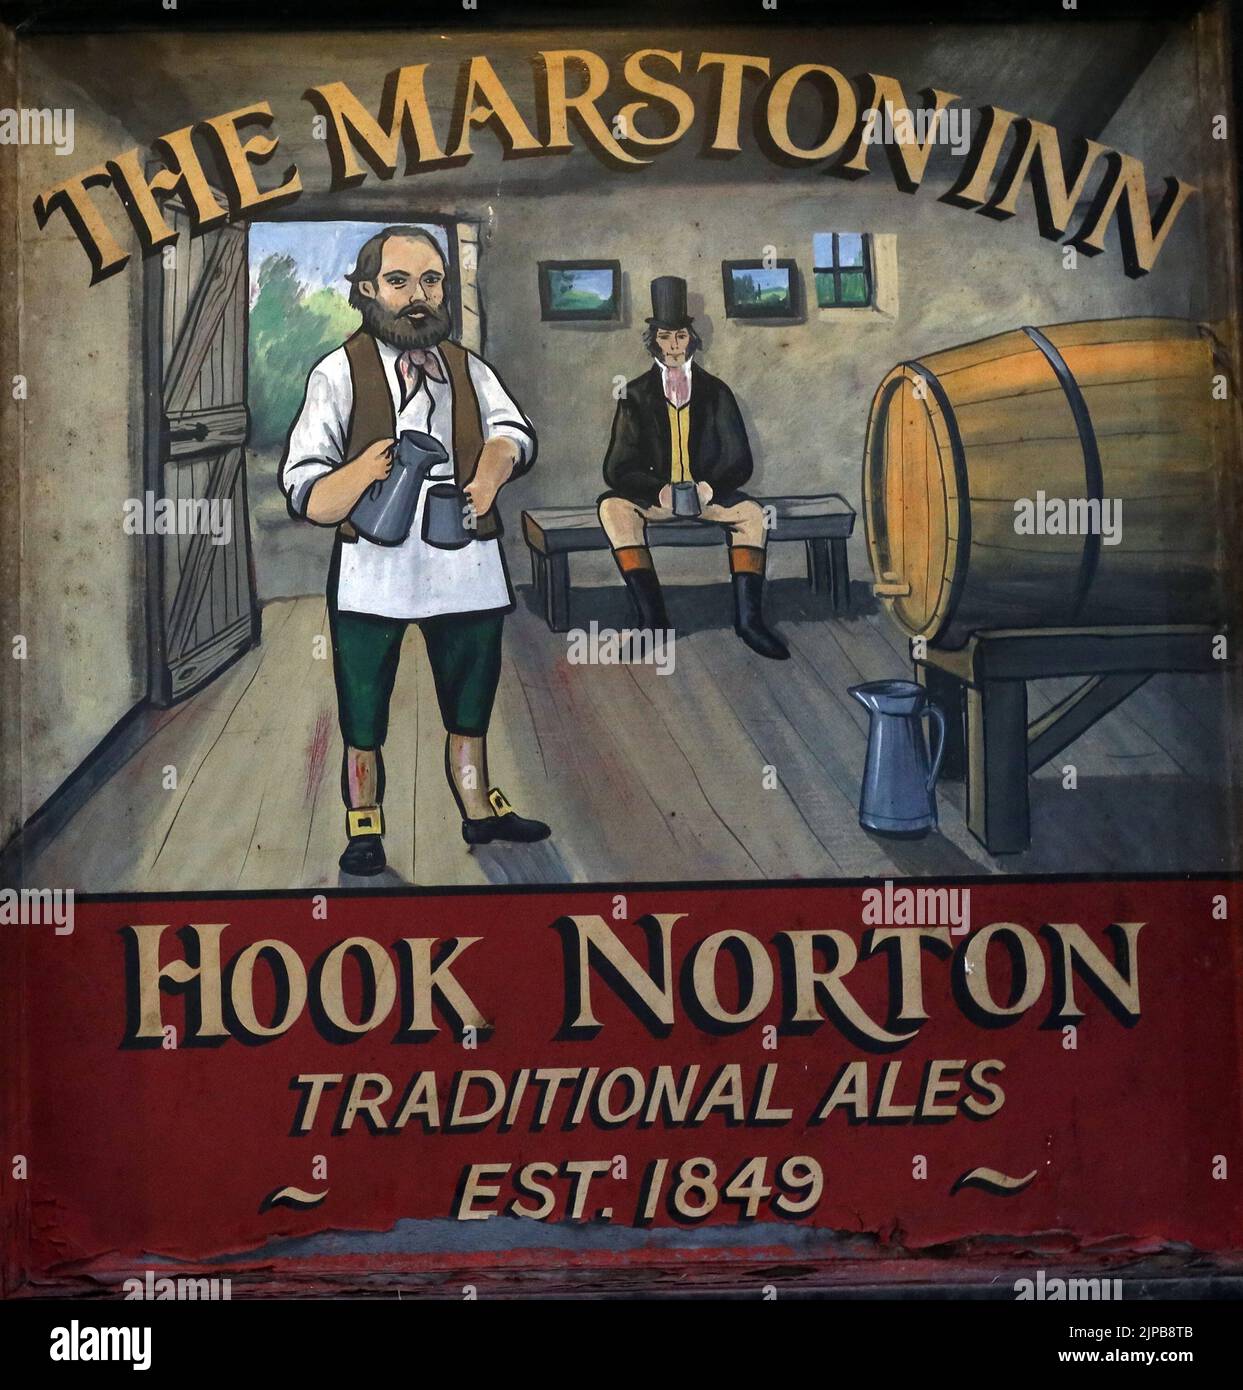 The Marston Inn - Hook Norton Ales klassisches Pub-Schild, Oxfordshire Craft Ale, Hook Norton, Banbury, Ochsen, England, Großbritannien, OX15 5NY, Est 1849 Stockfoto